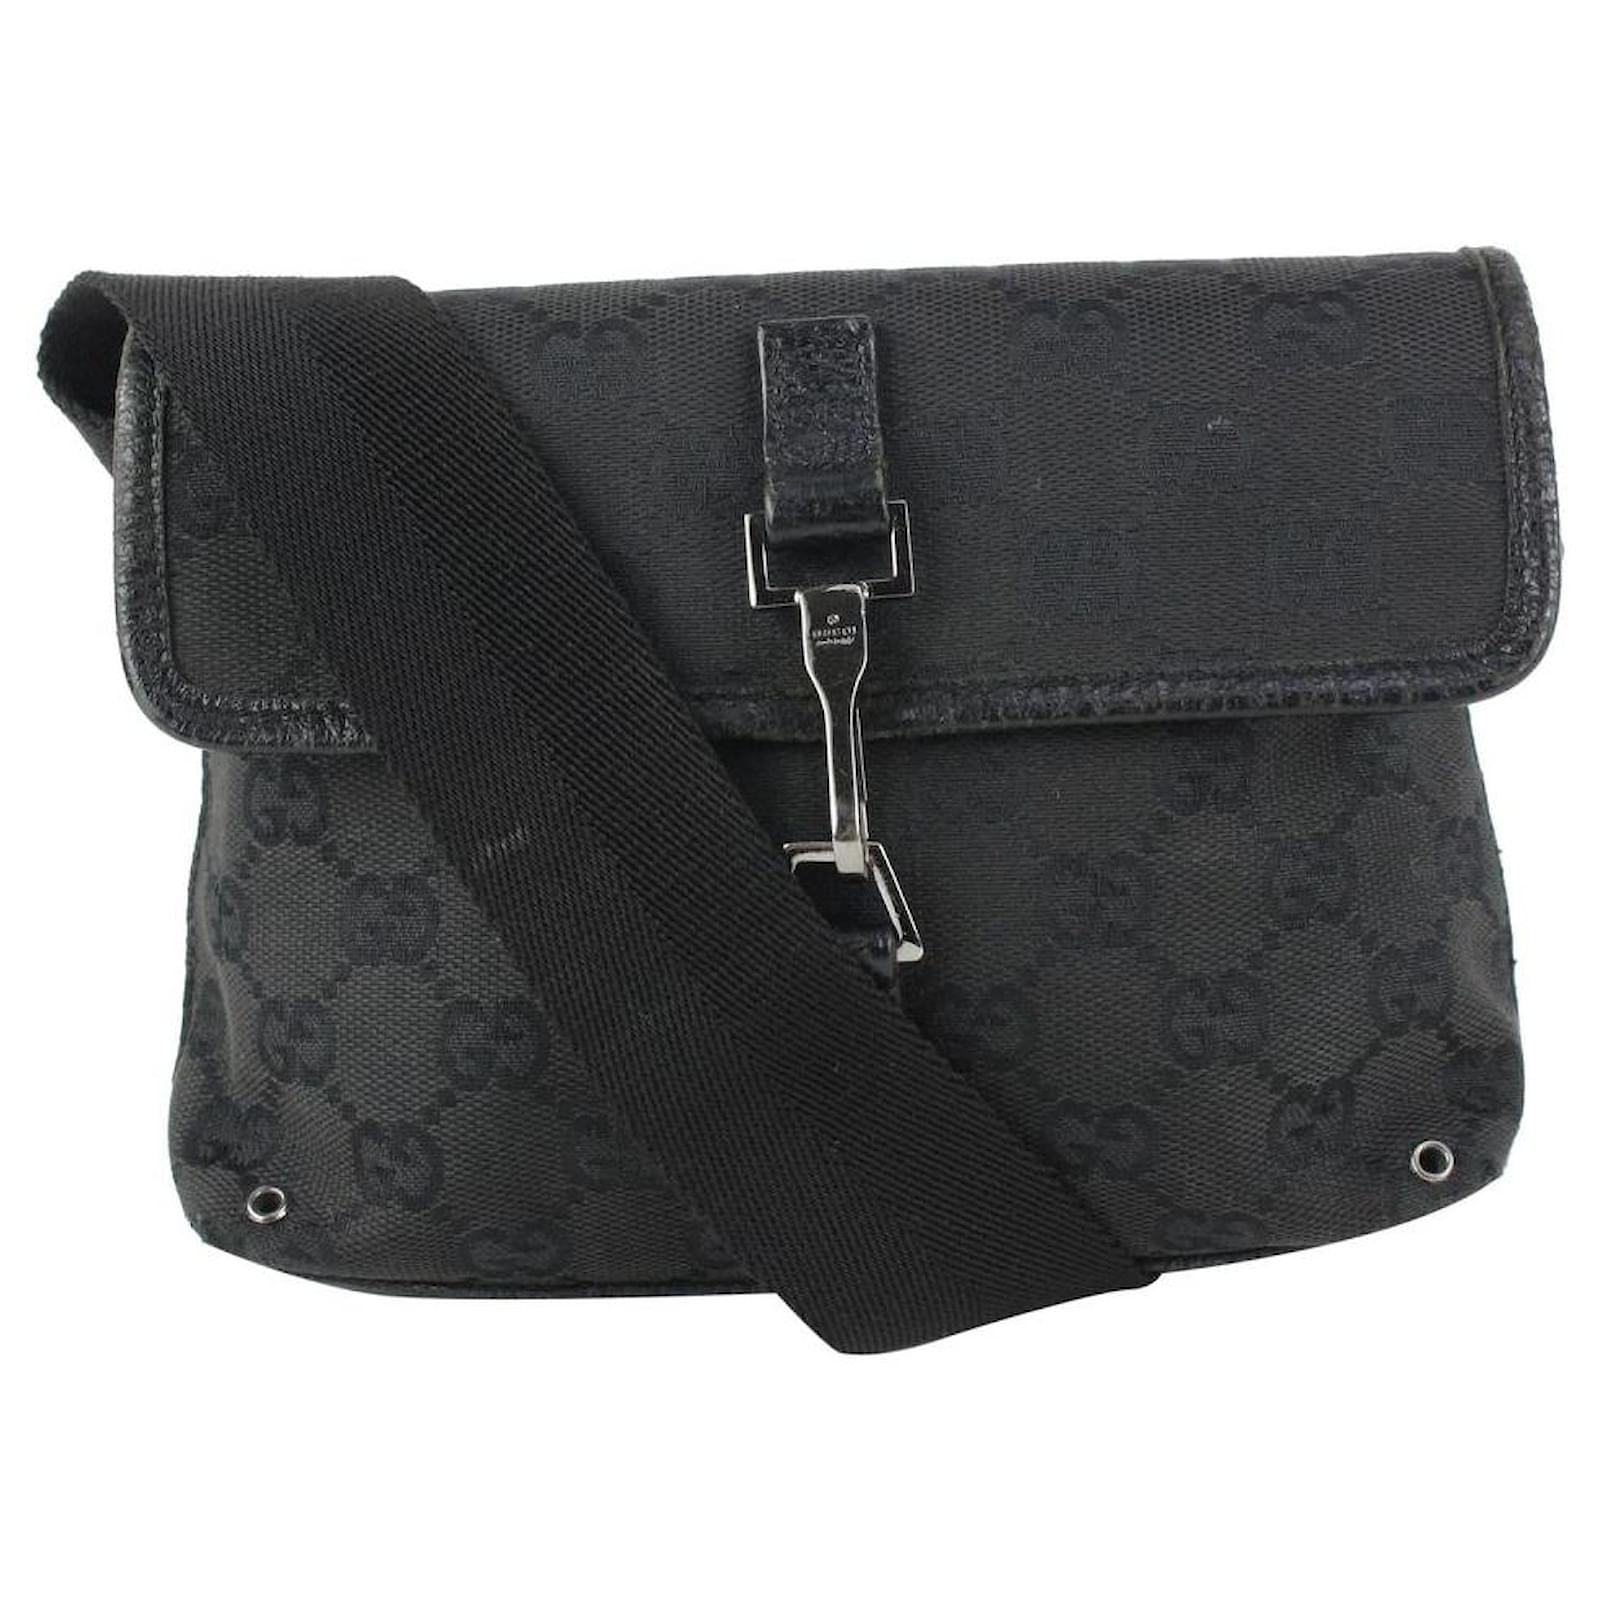 Gucci Black Monogram Handbag